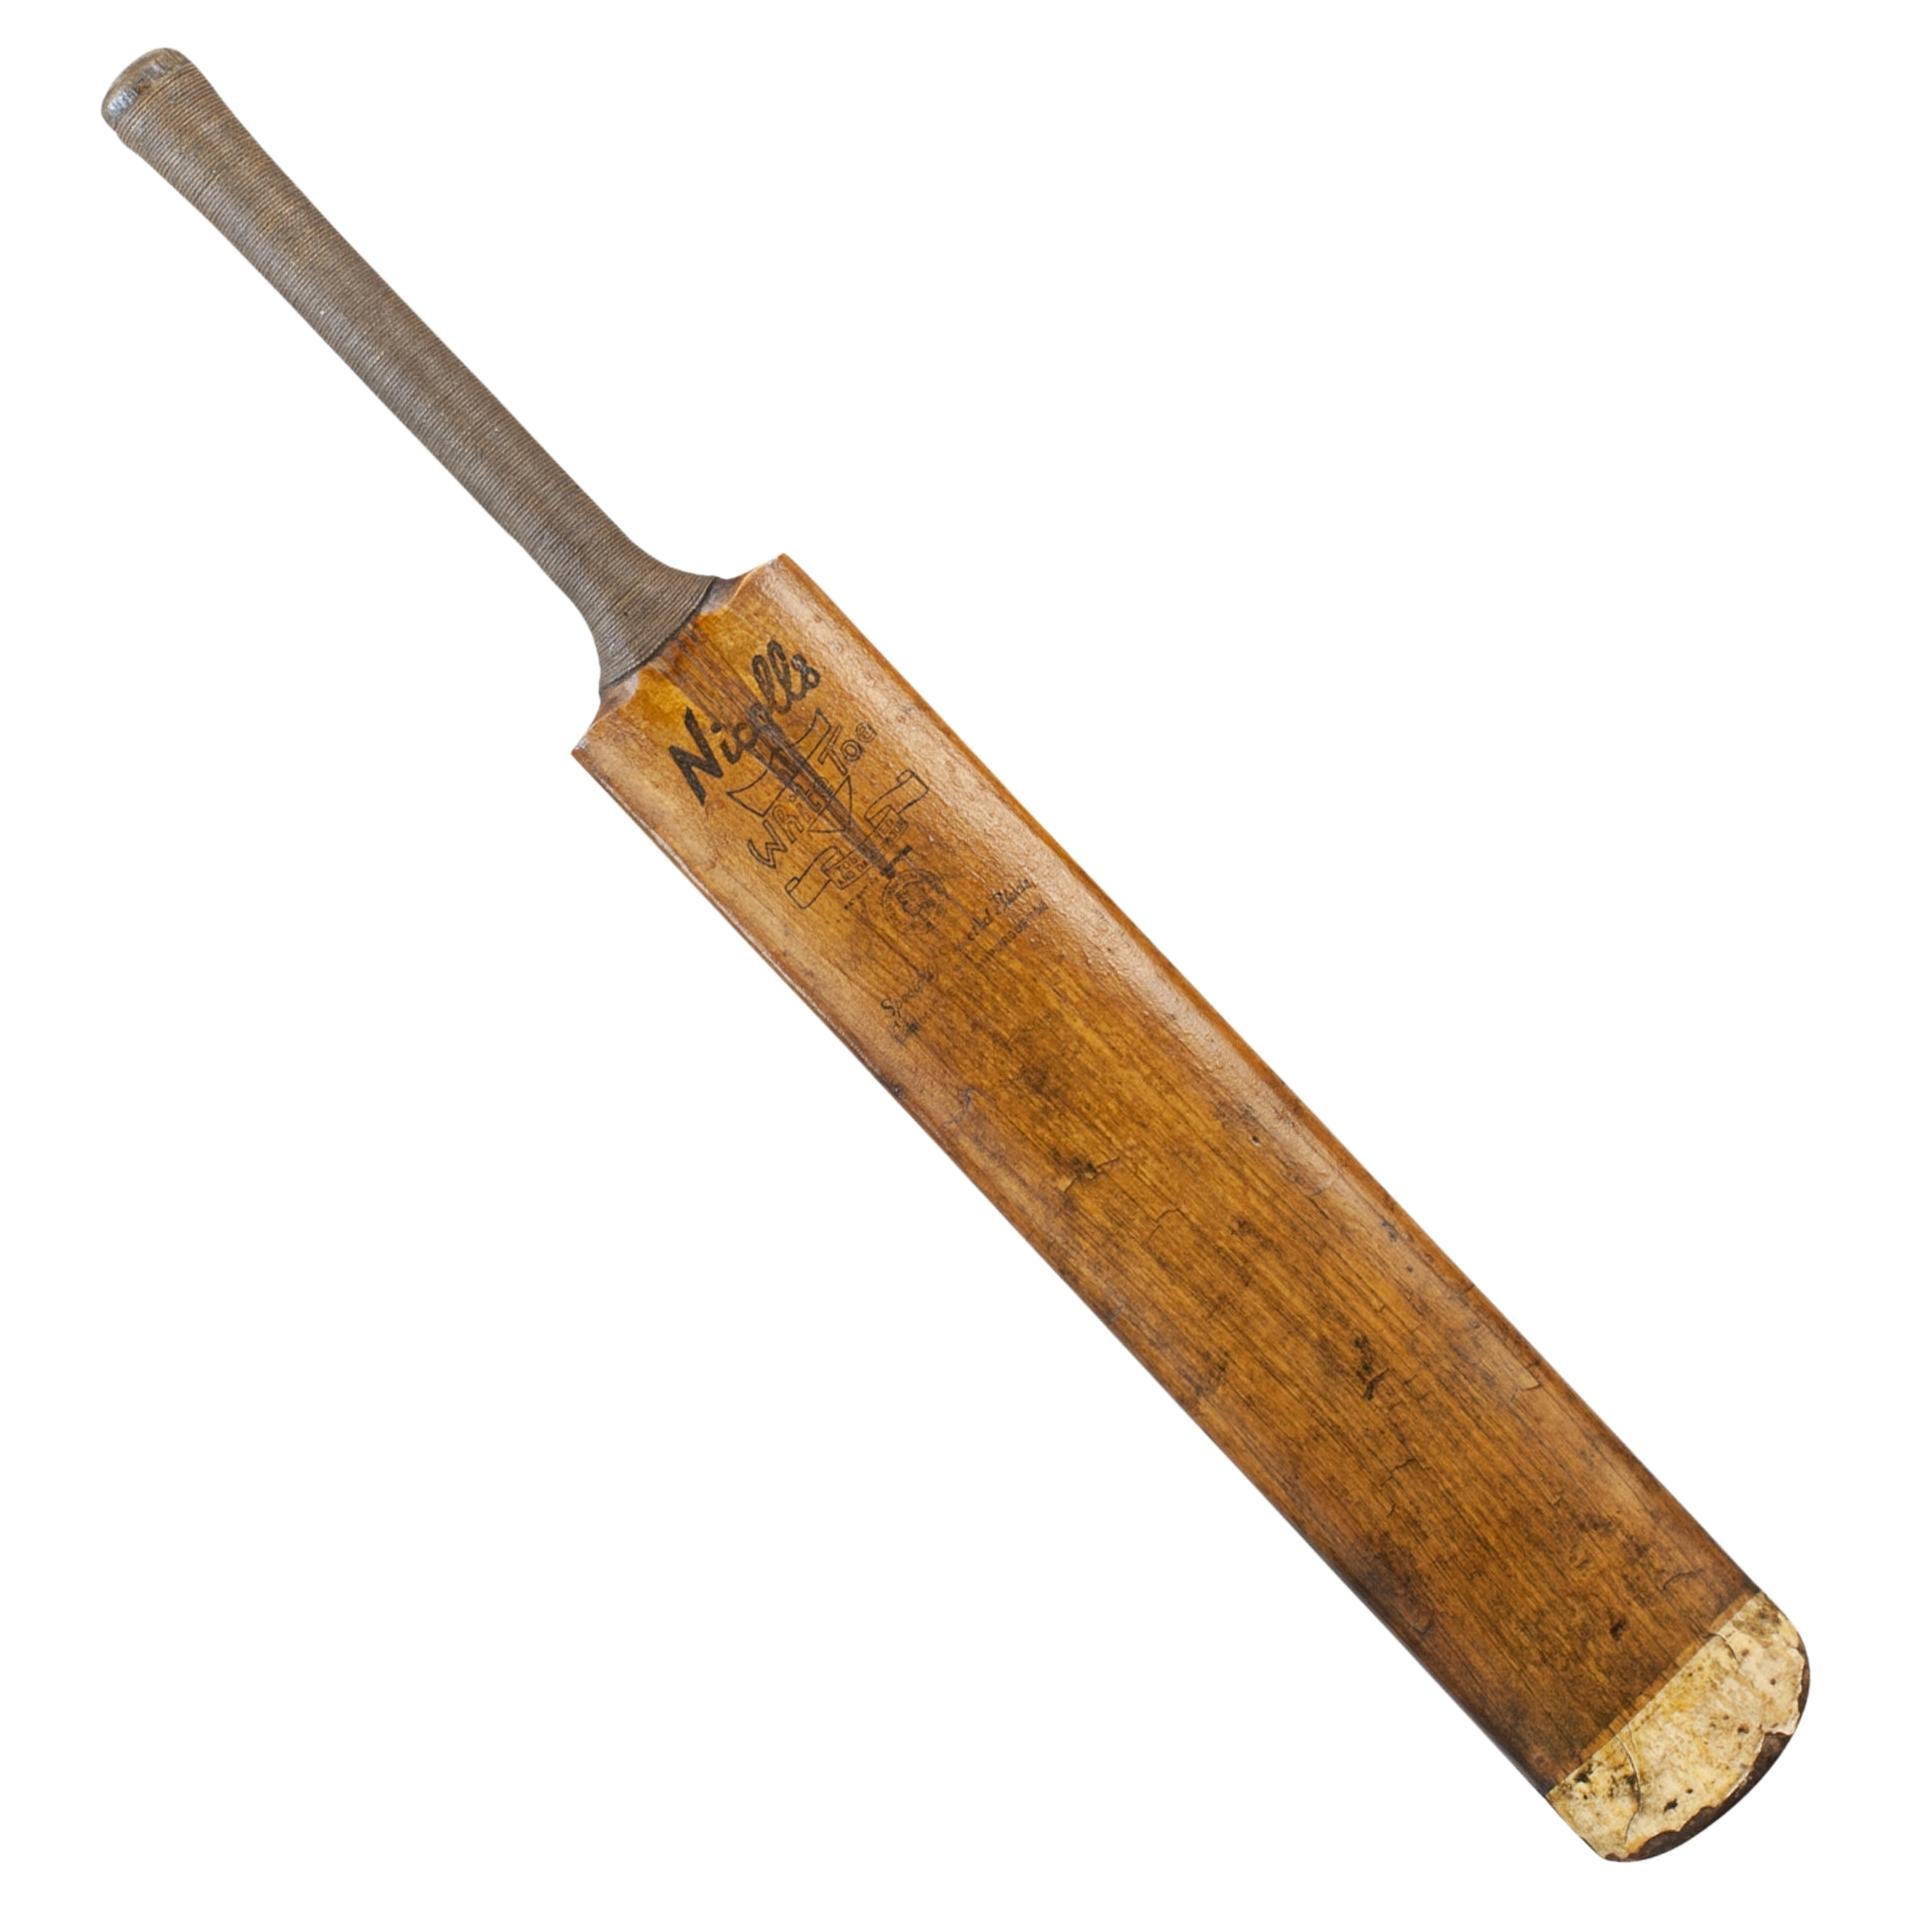  Vintage Cricket Bat, Nicolls 'White Toe' For Sale